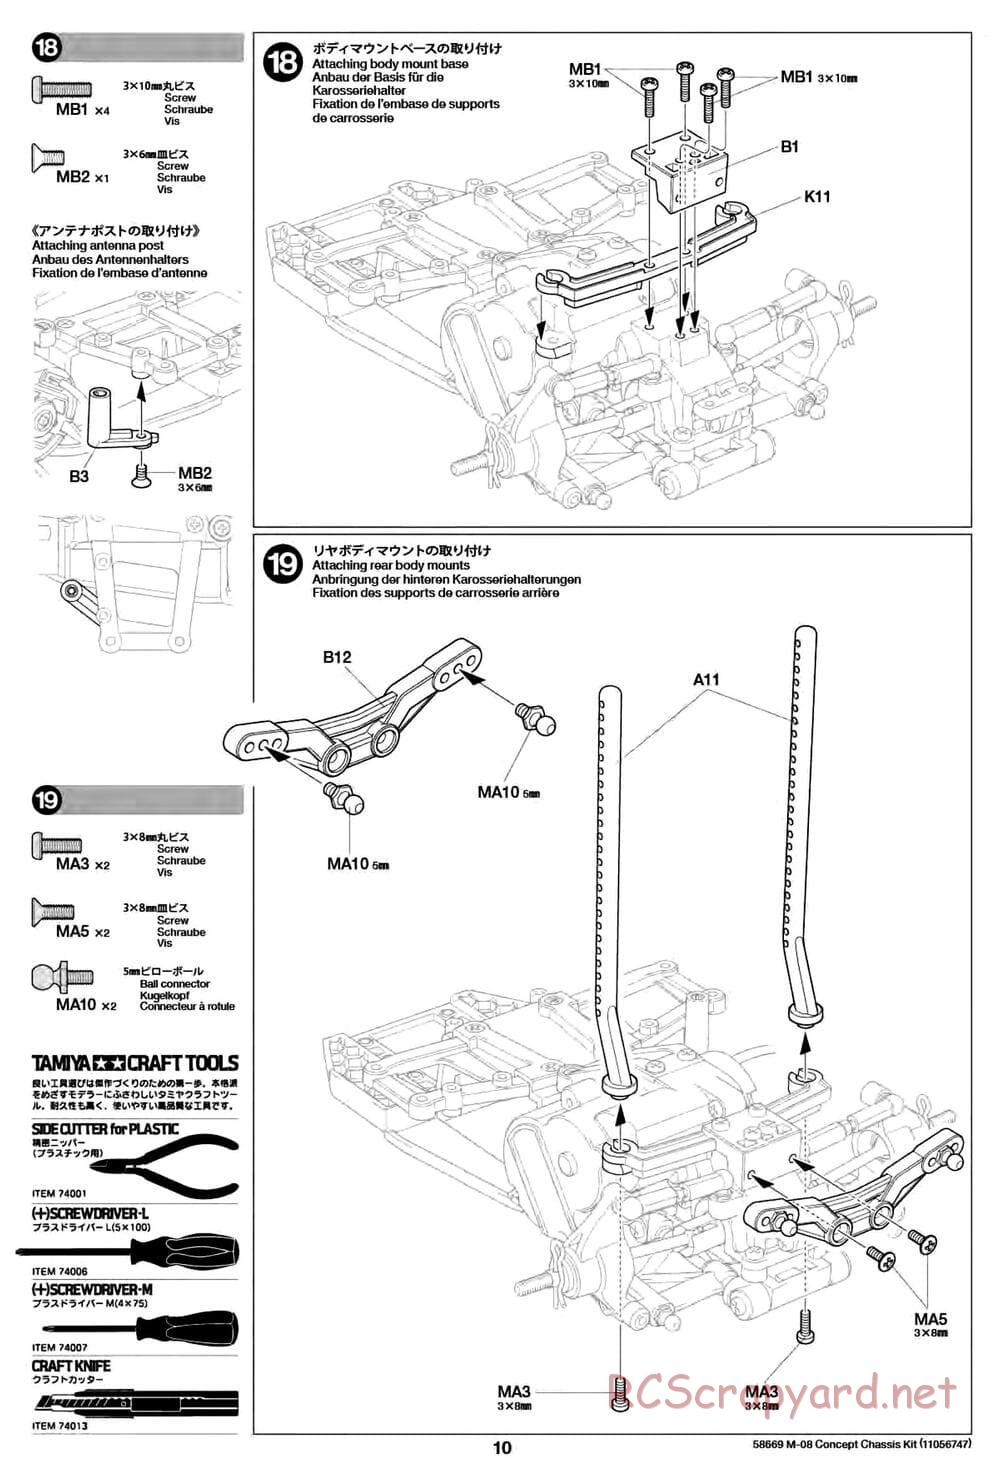 Tamiya - M-08 Concept Chassis - Manual - Page 10